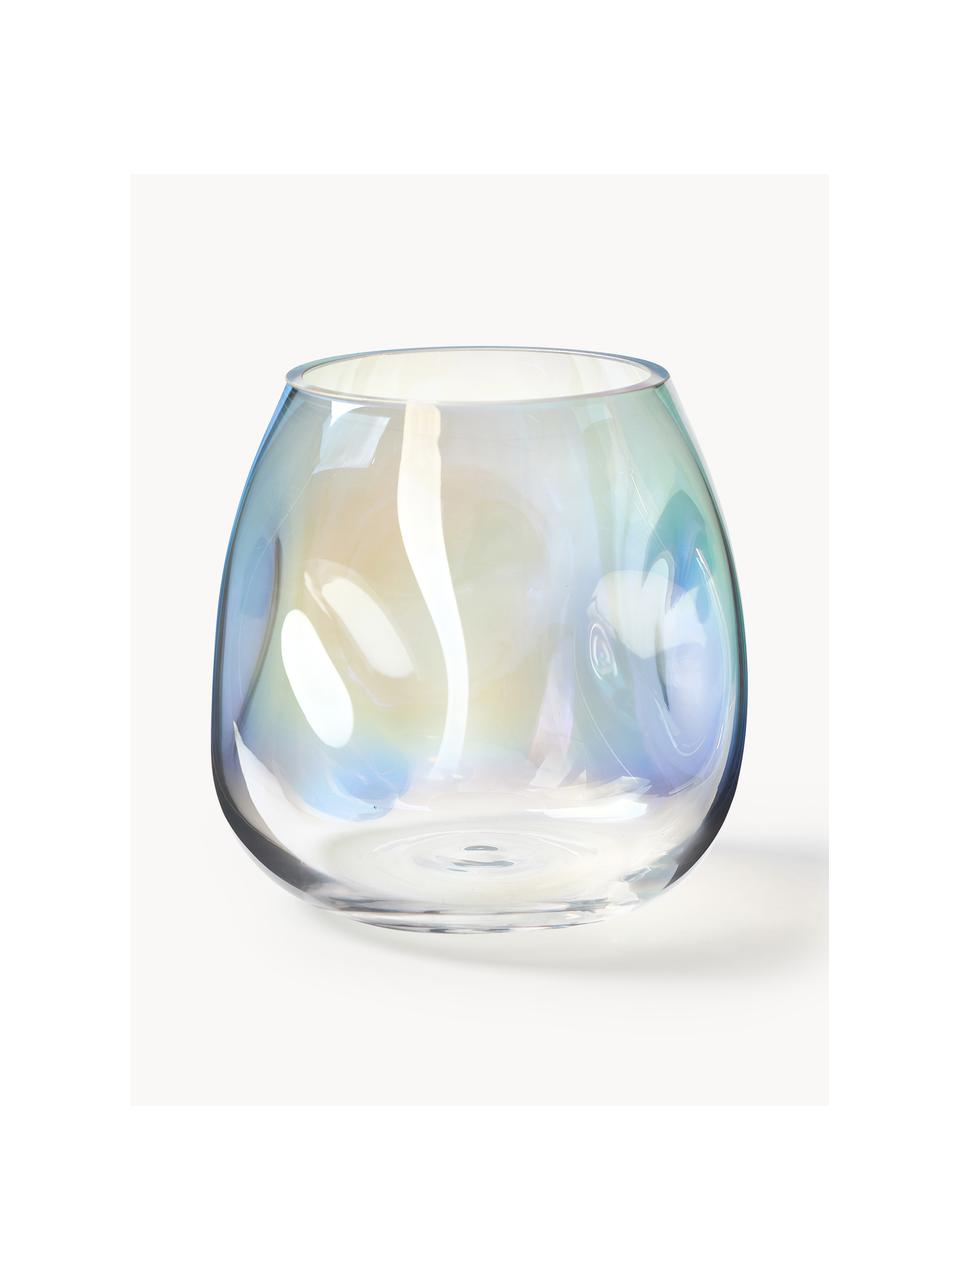 Jarrón de vidrio soplado Rainbow, 17 cm, Vidrio soplado artesanalmente, Transparente iridiscente, Ø 17 x Al 17 cm